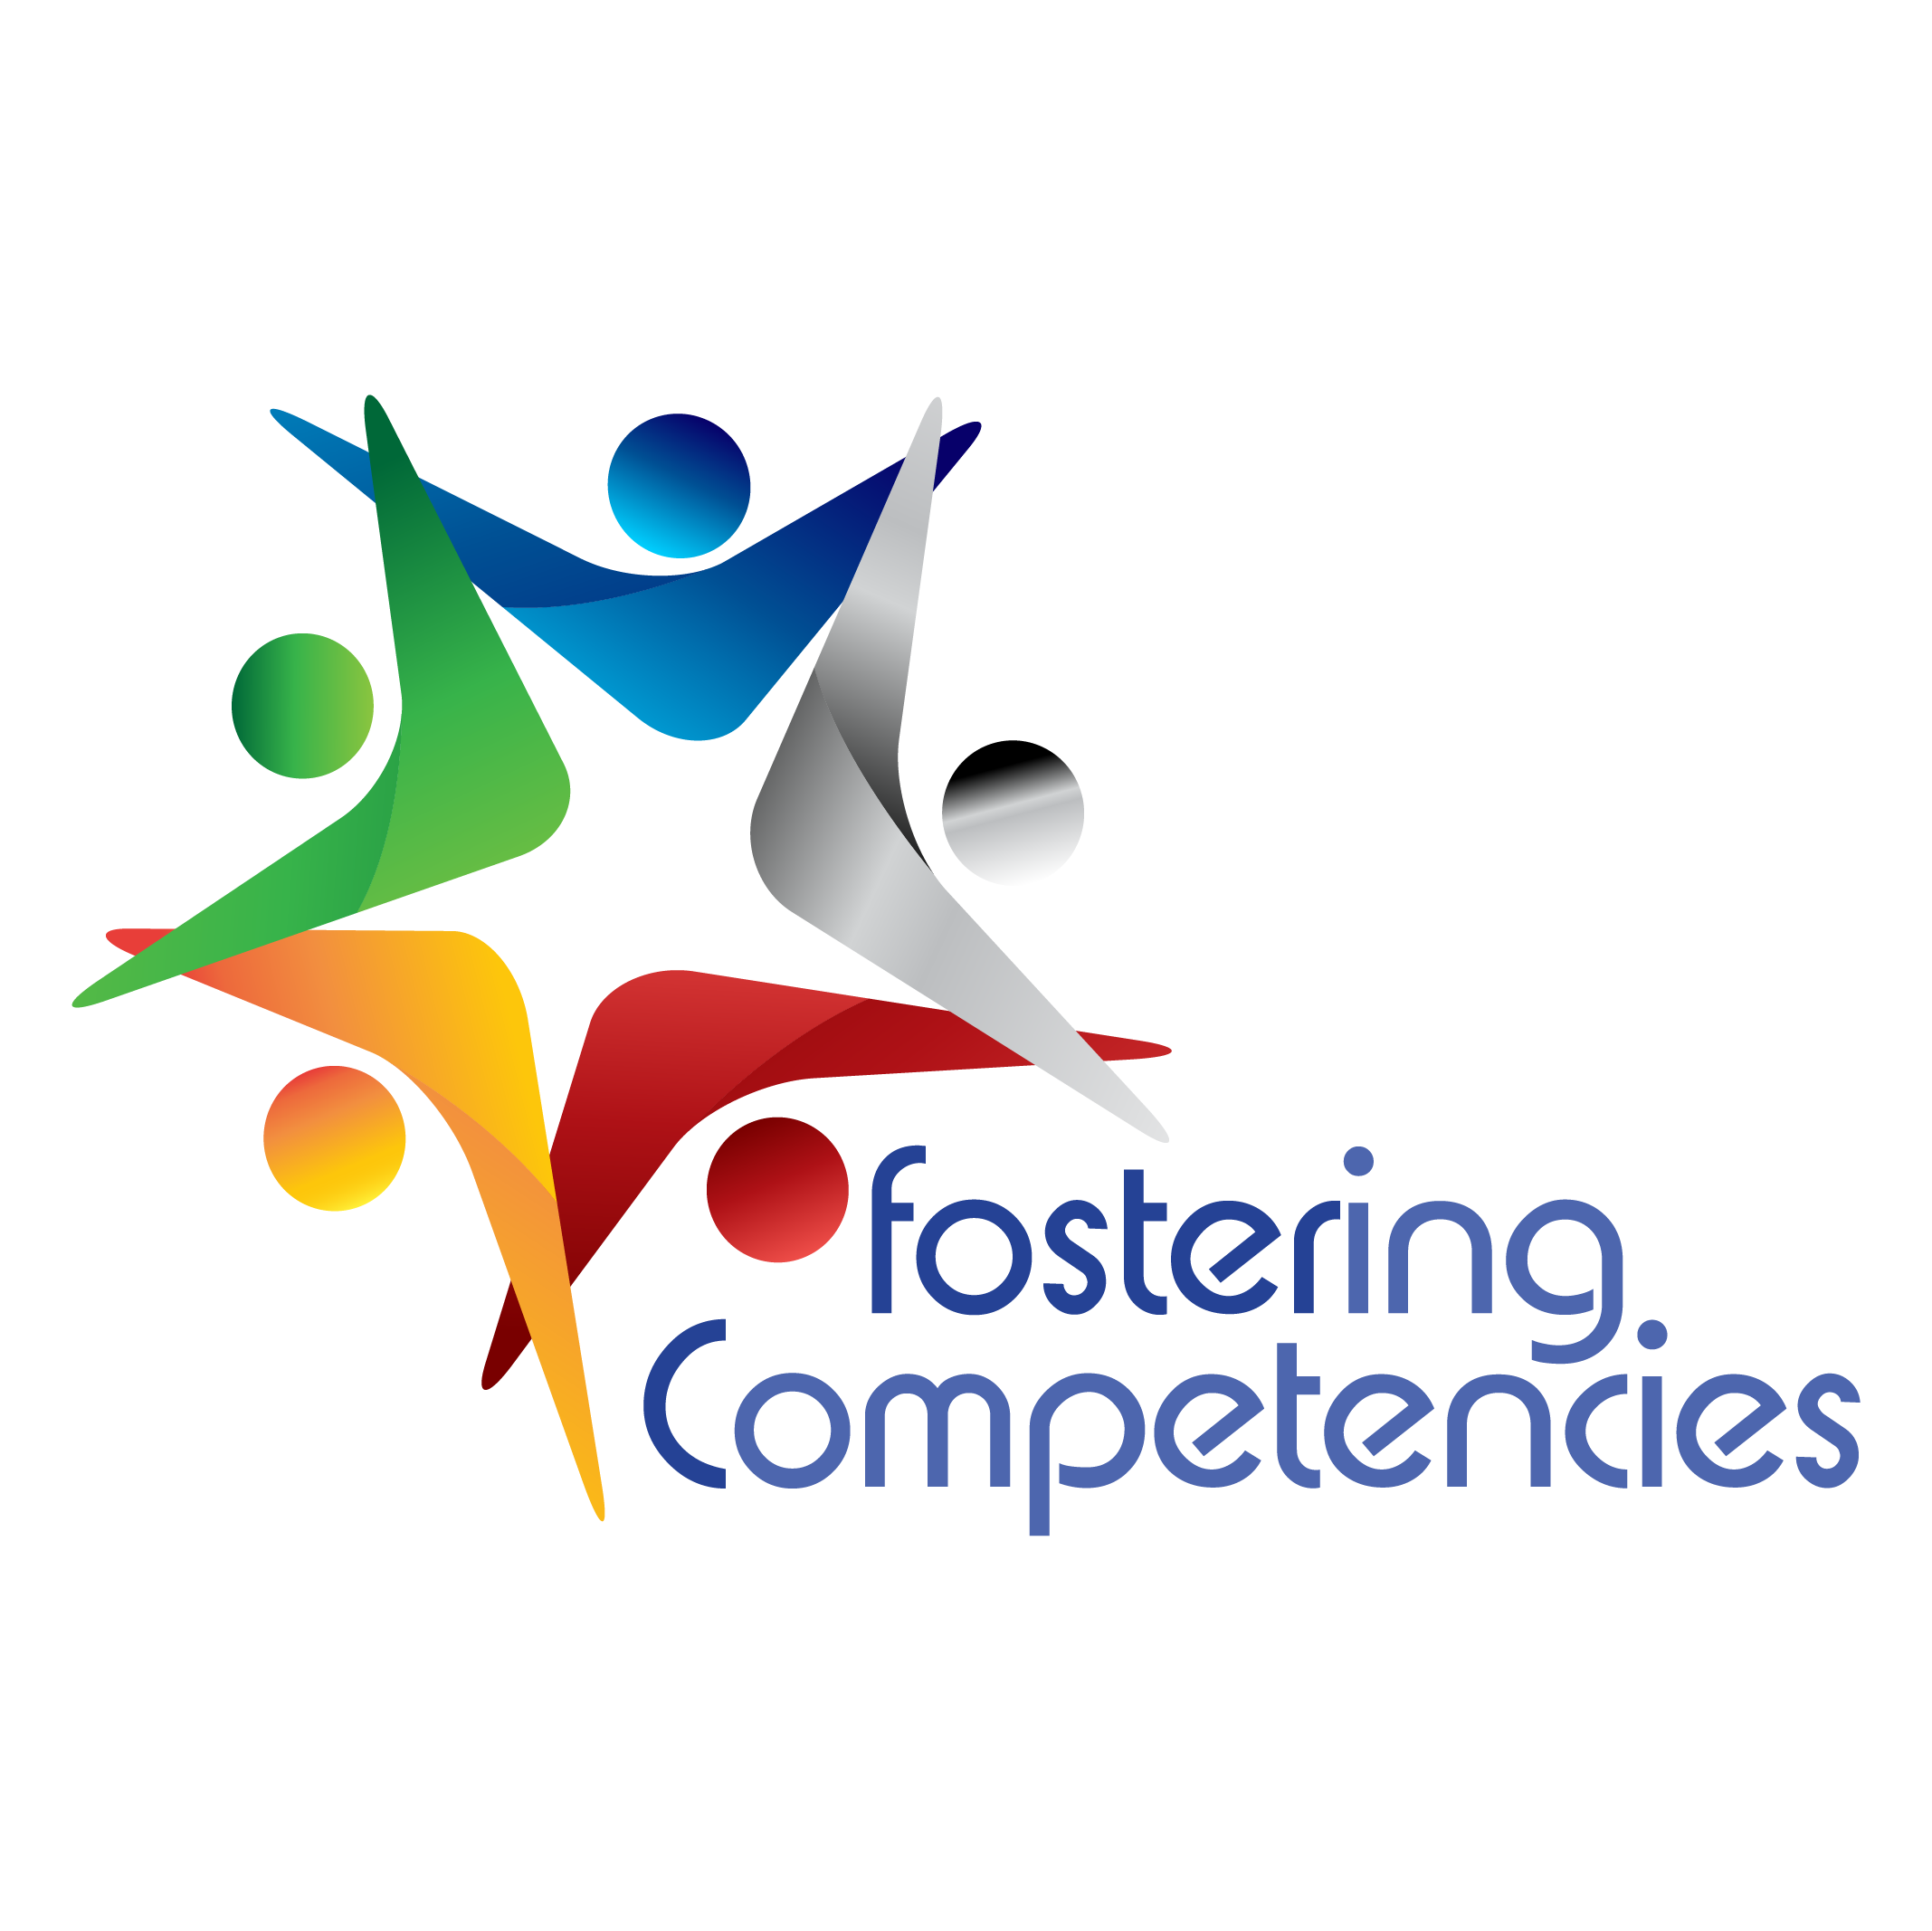 fostering competencies